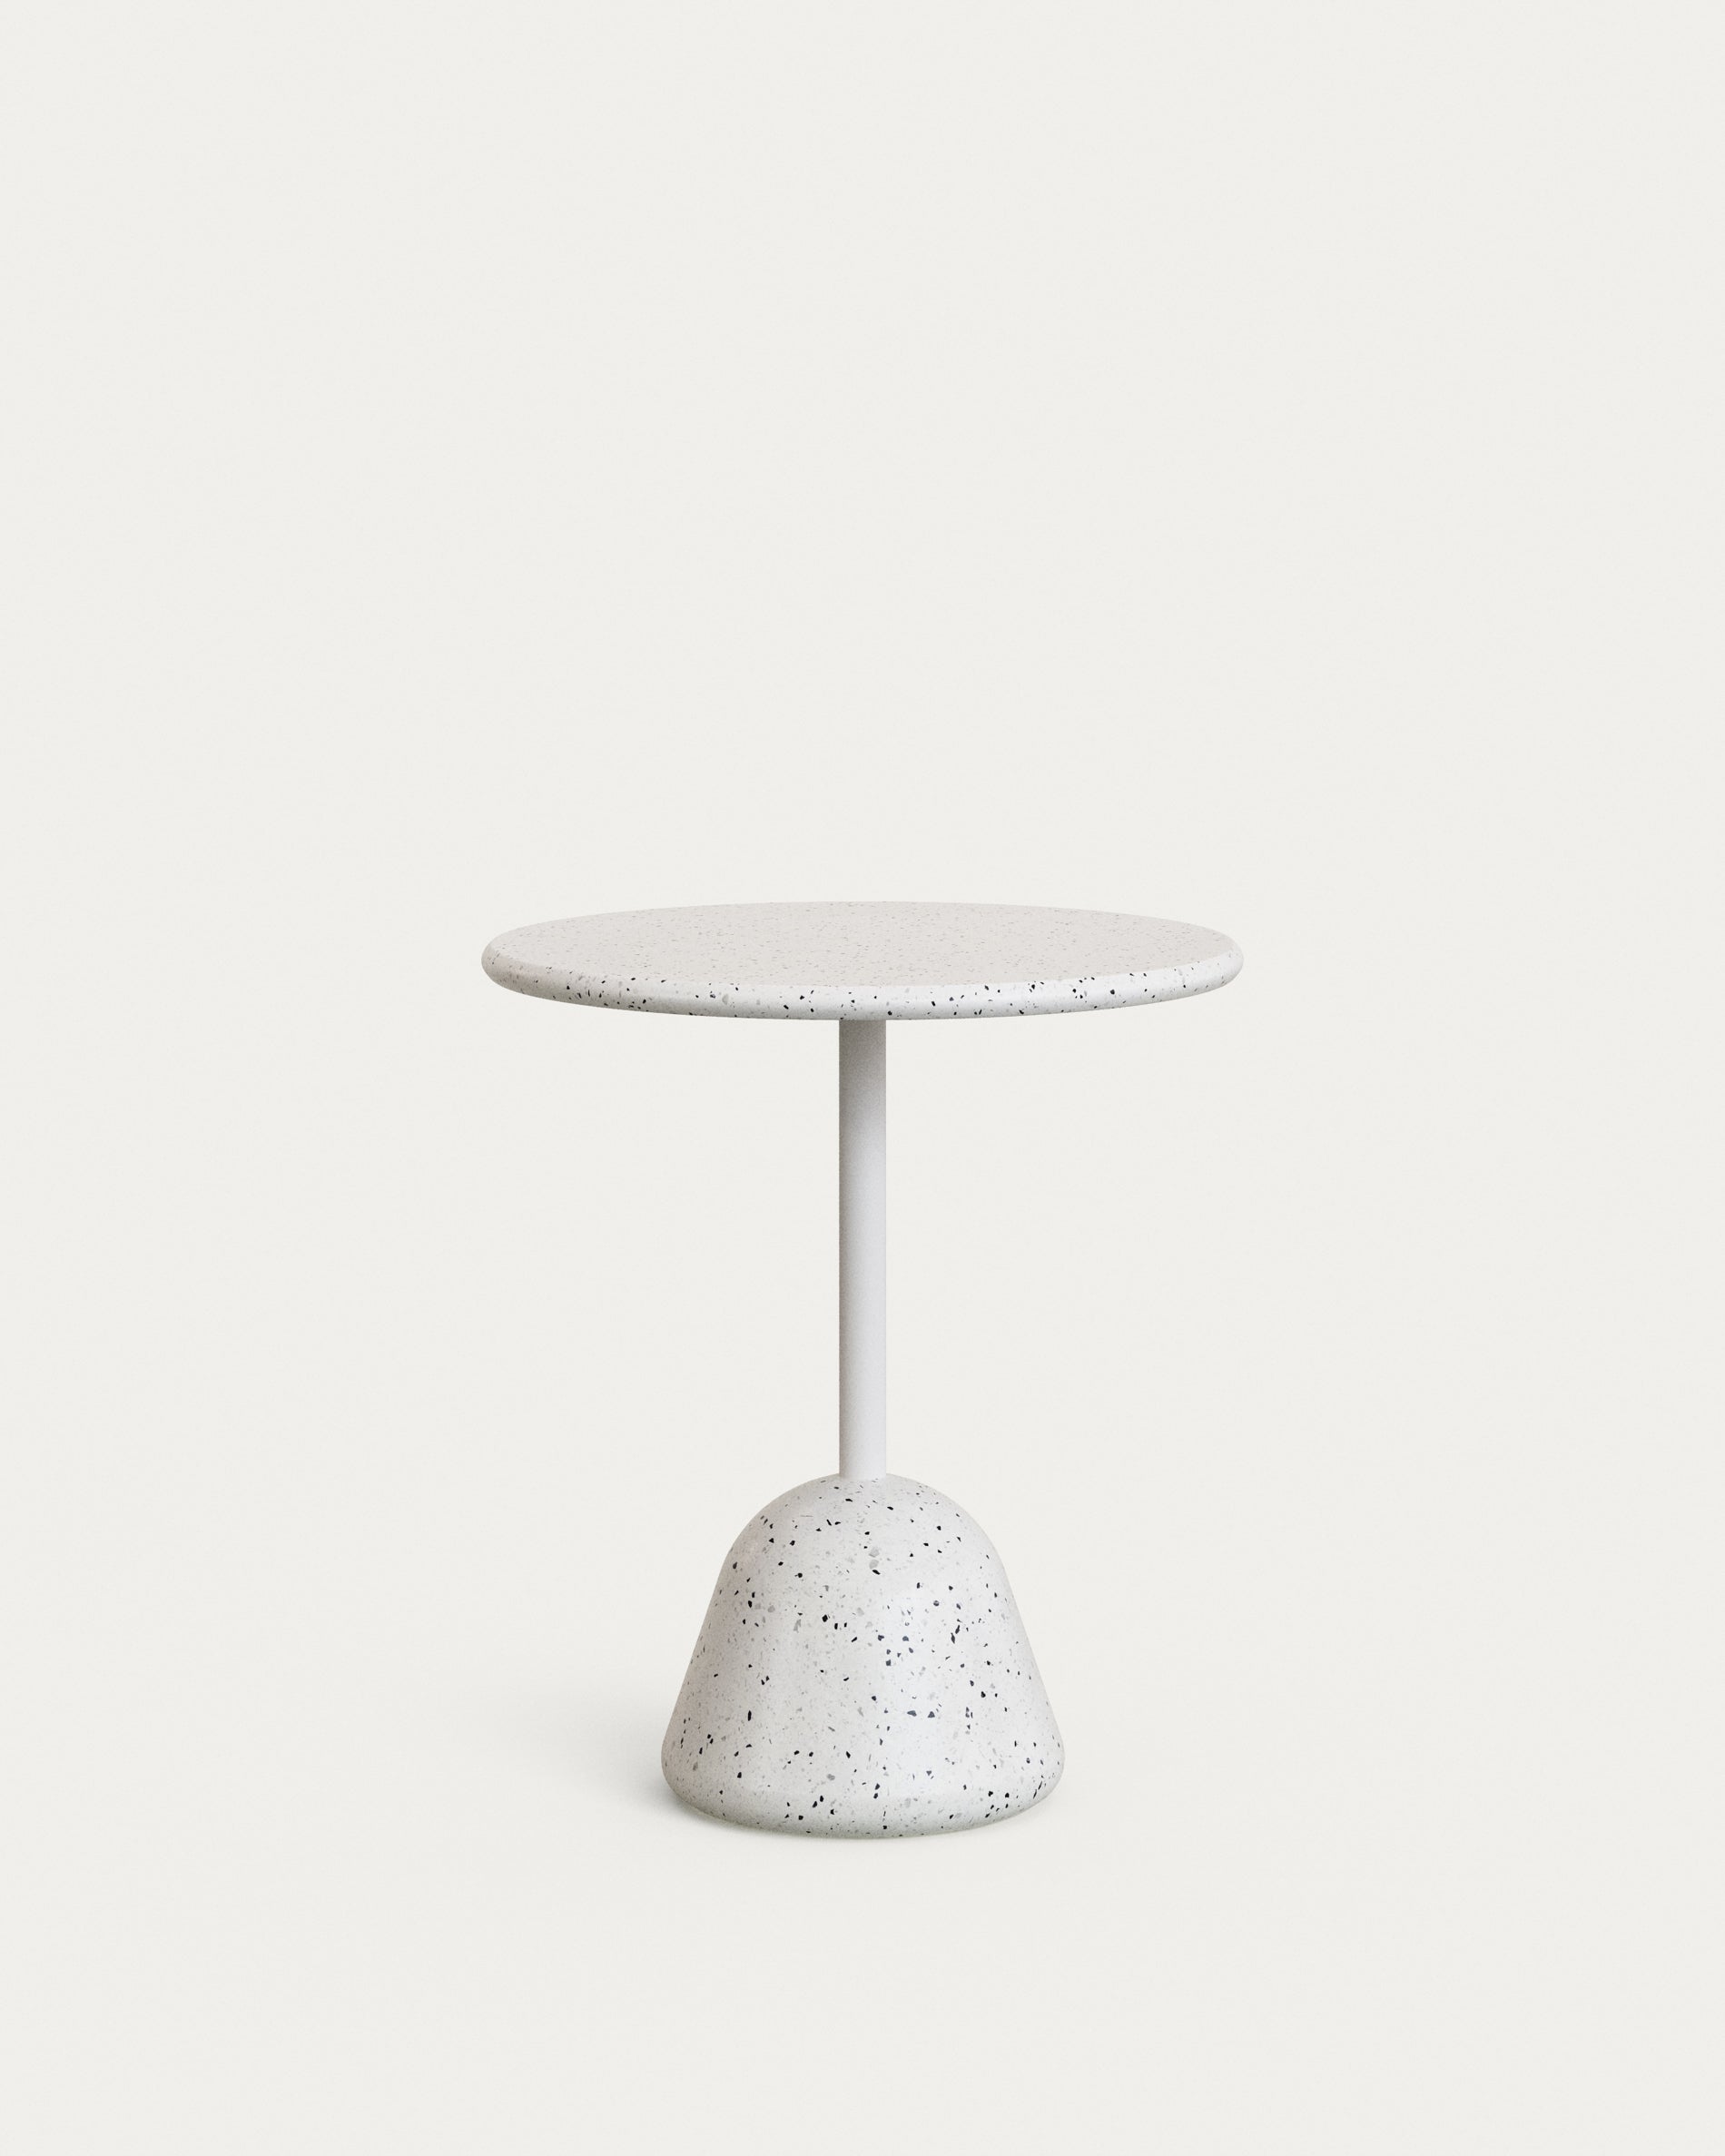 Saura table with white terrazzo and white terrazzo top, 75 x 70